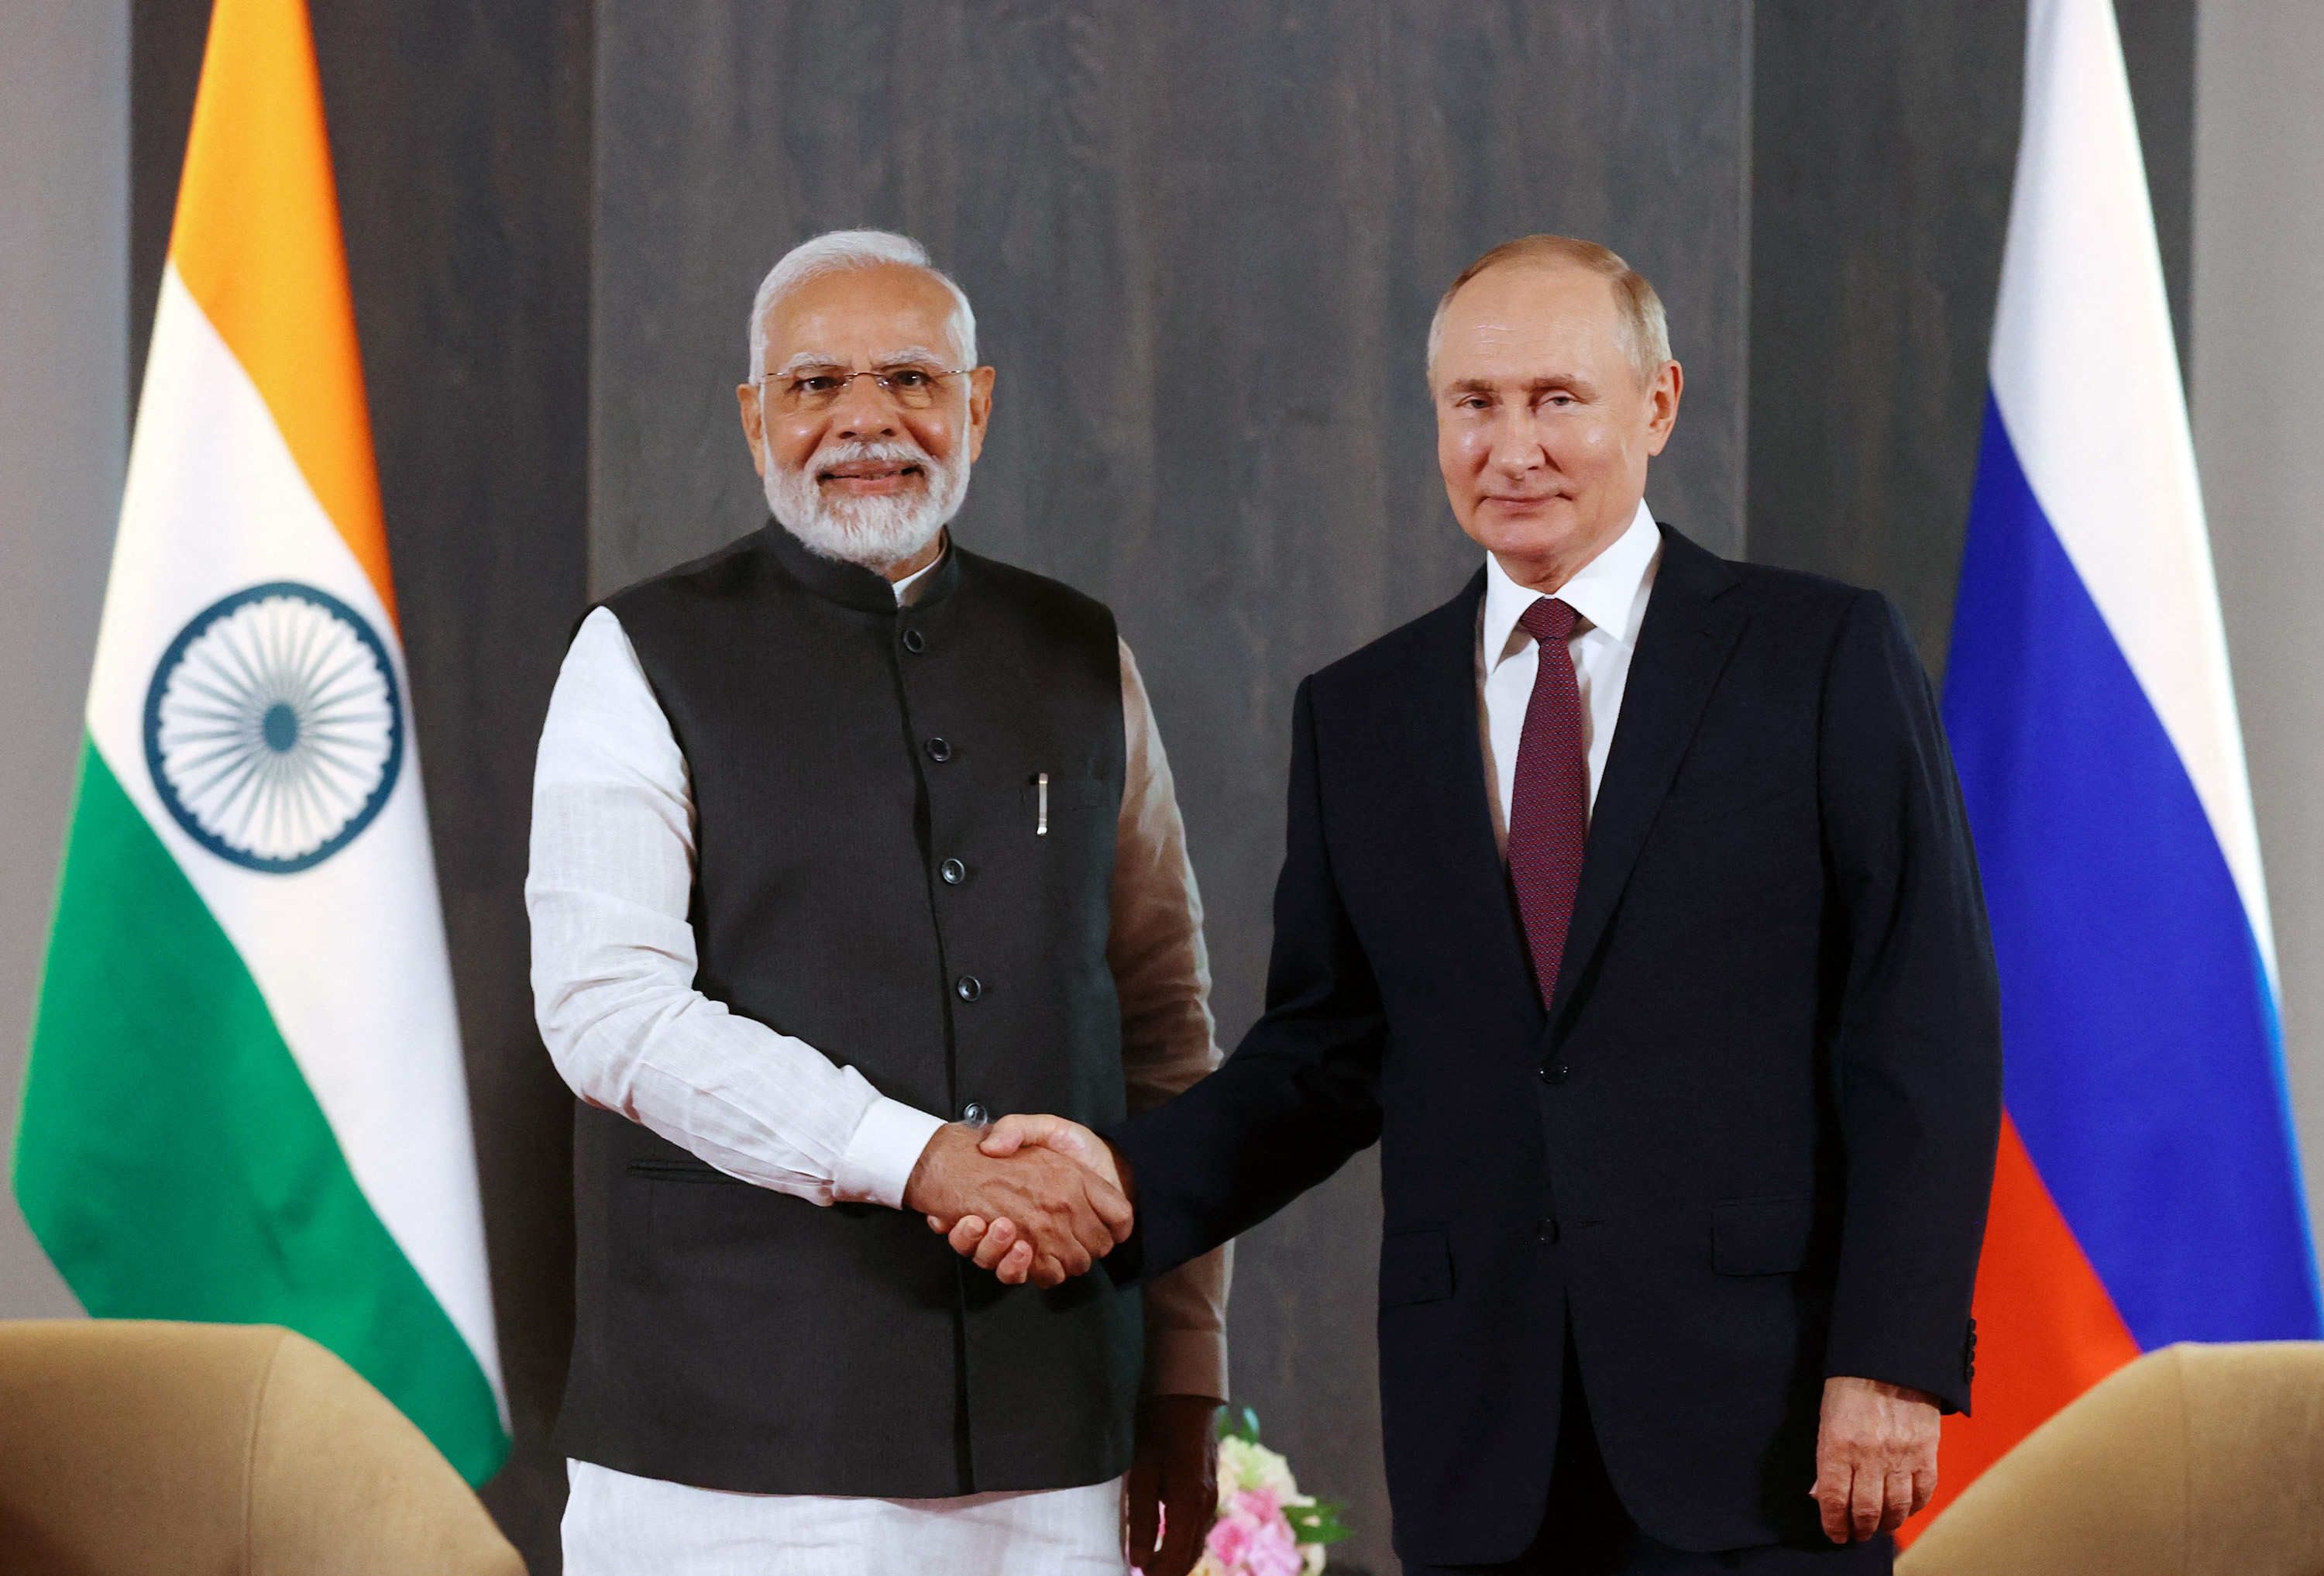 Narendra Modi and Vladimir Putin&nbsp;in Samarkand, Uzbekistan, on Sept. 16.